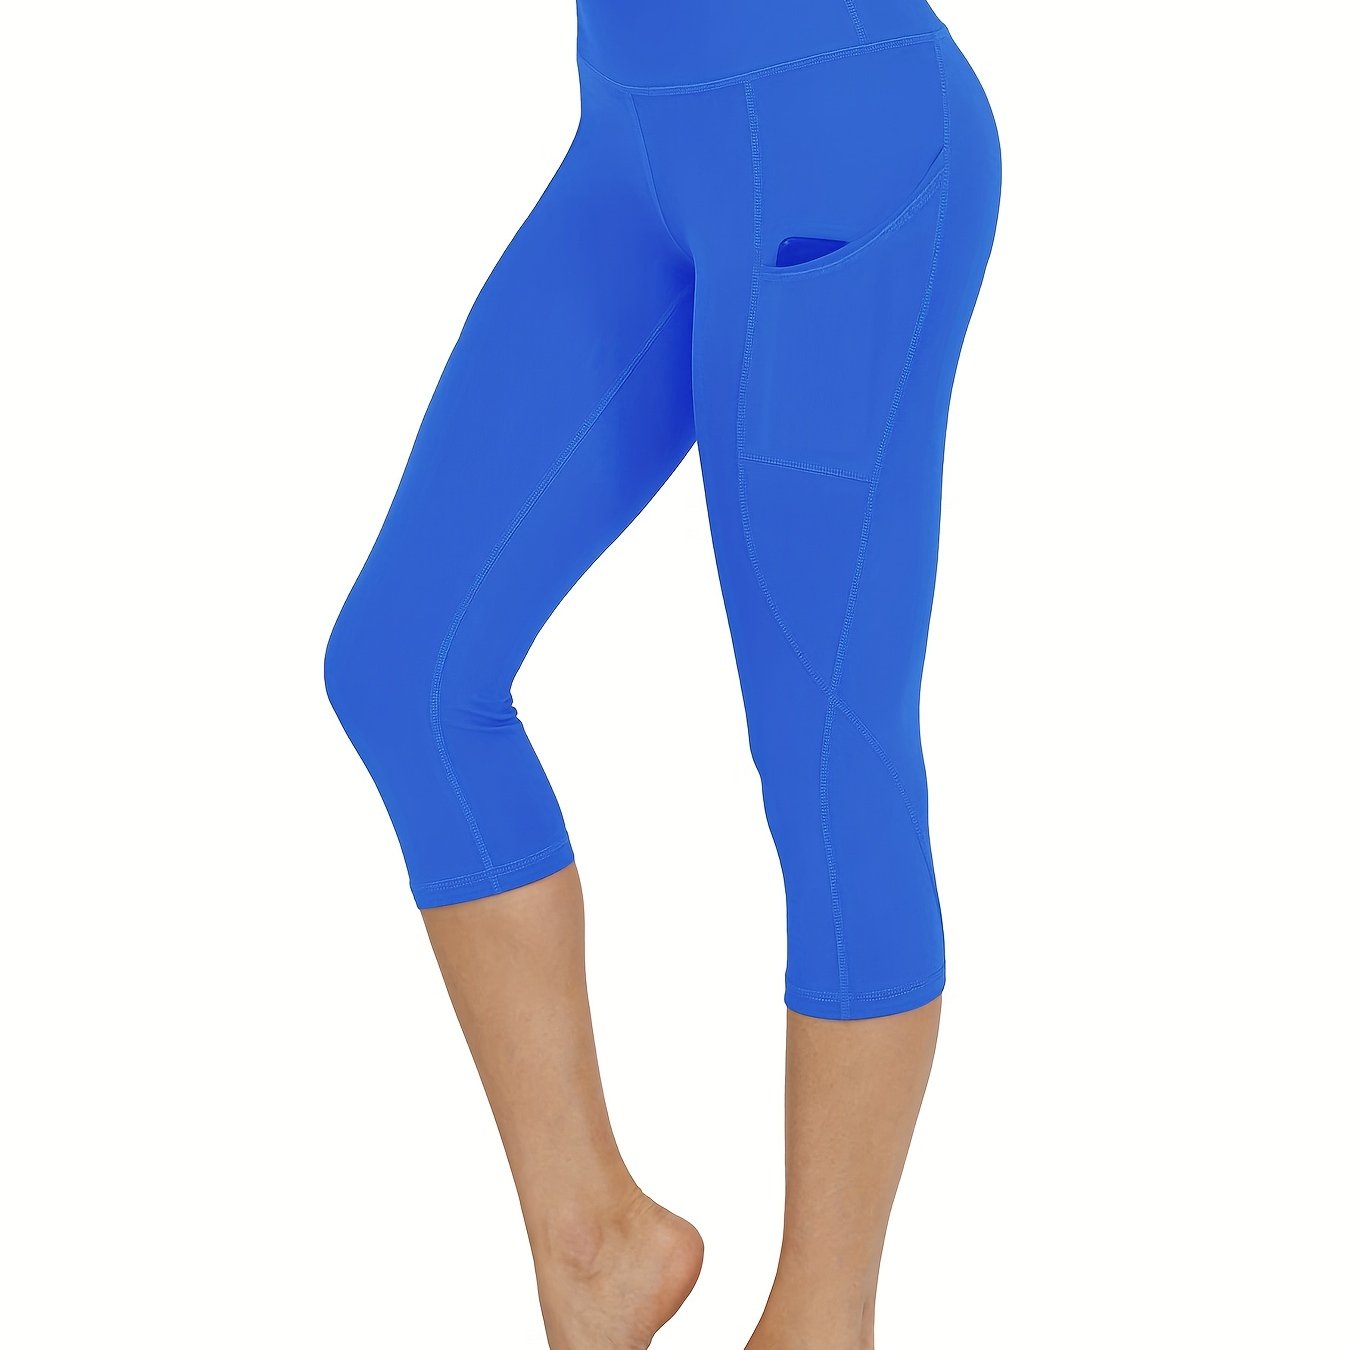 IMIDO Women's Yoga Capri Pants Sport Tights Workout Running Mesh Leggings  with Side Pocket (L, Capri Pants Blue)